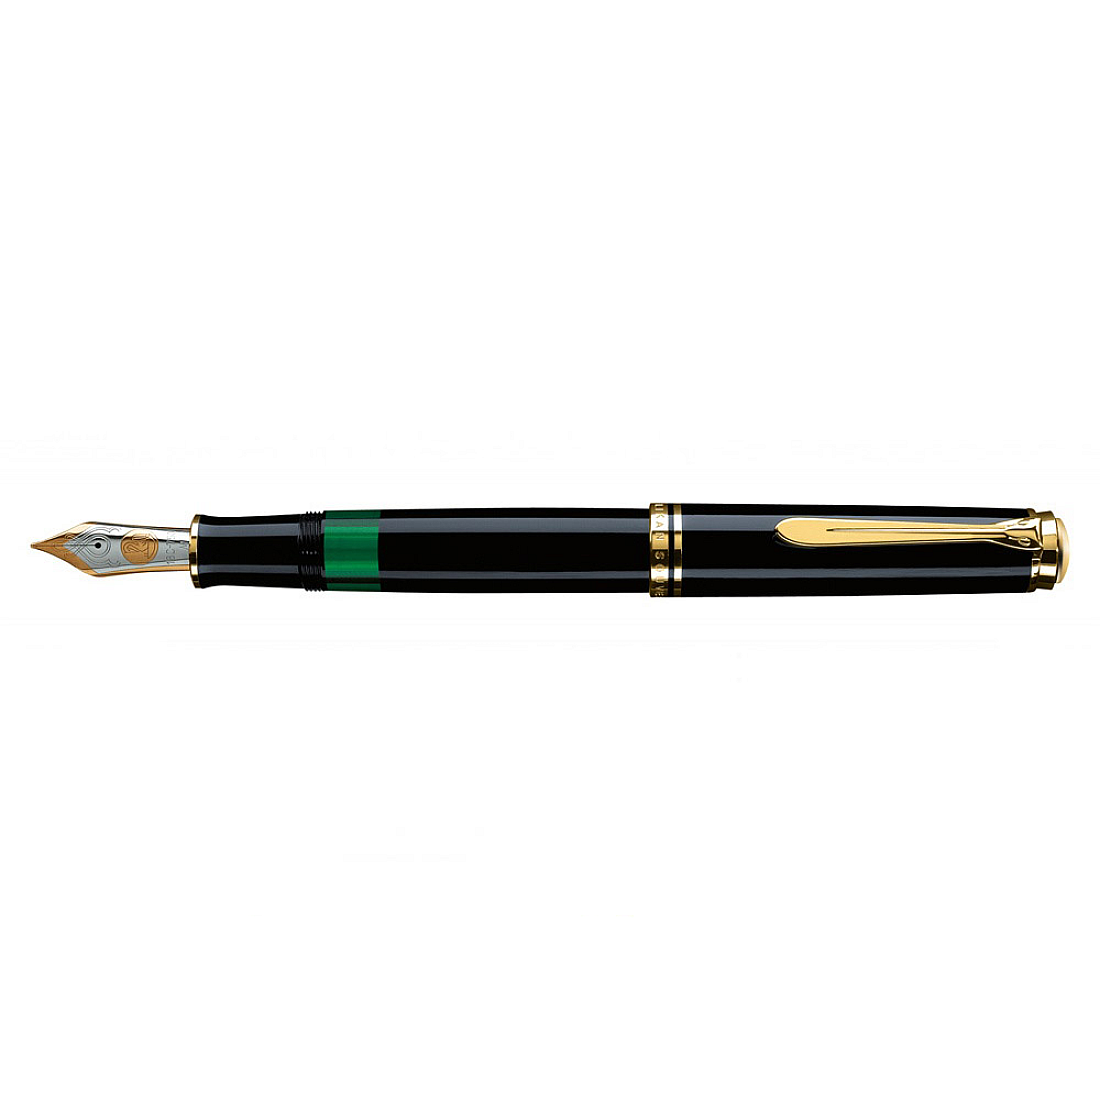 Pelikan Souverän M800 Black Fountain pen